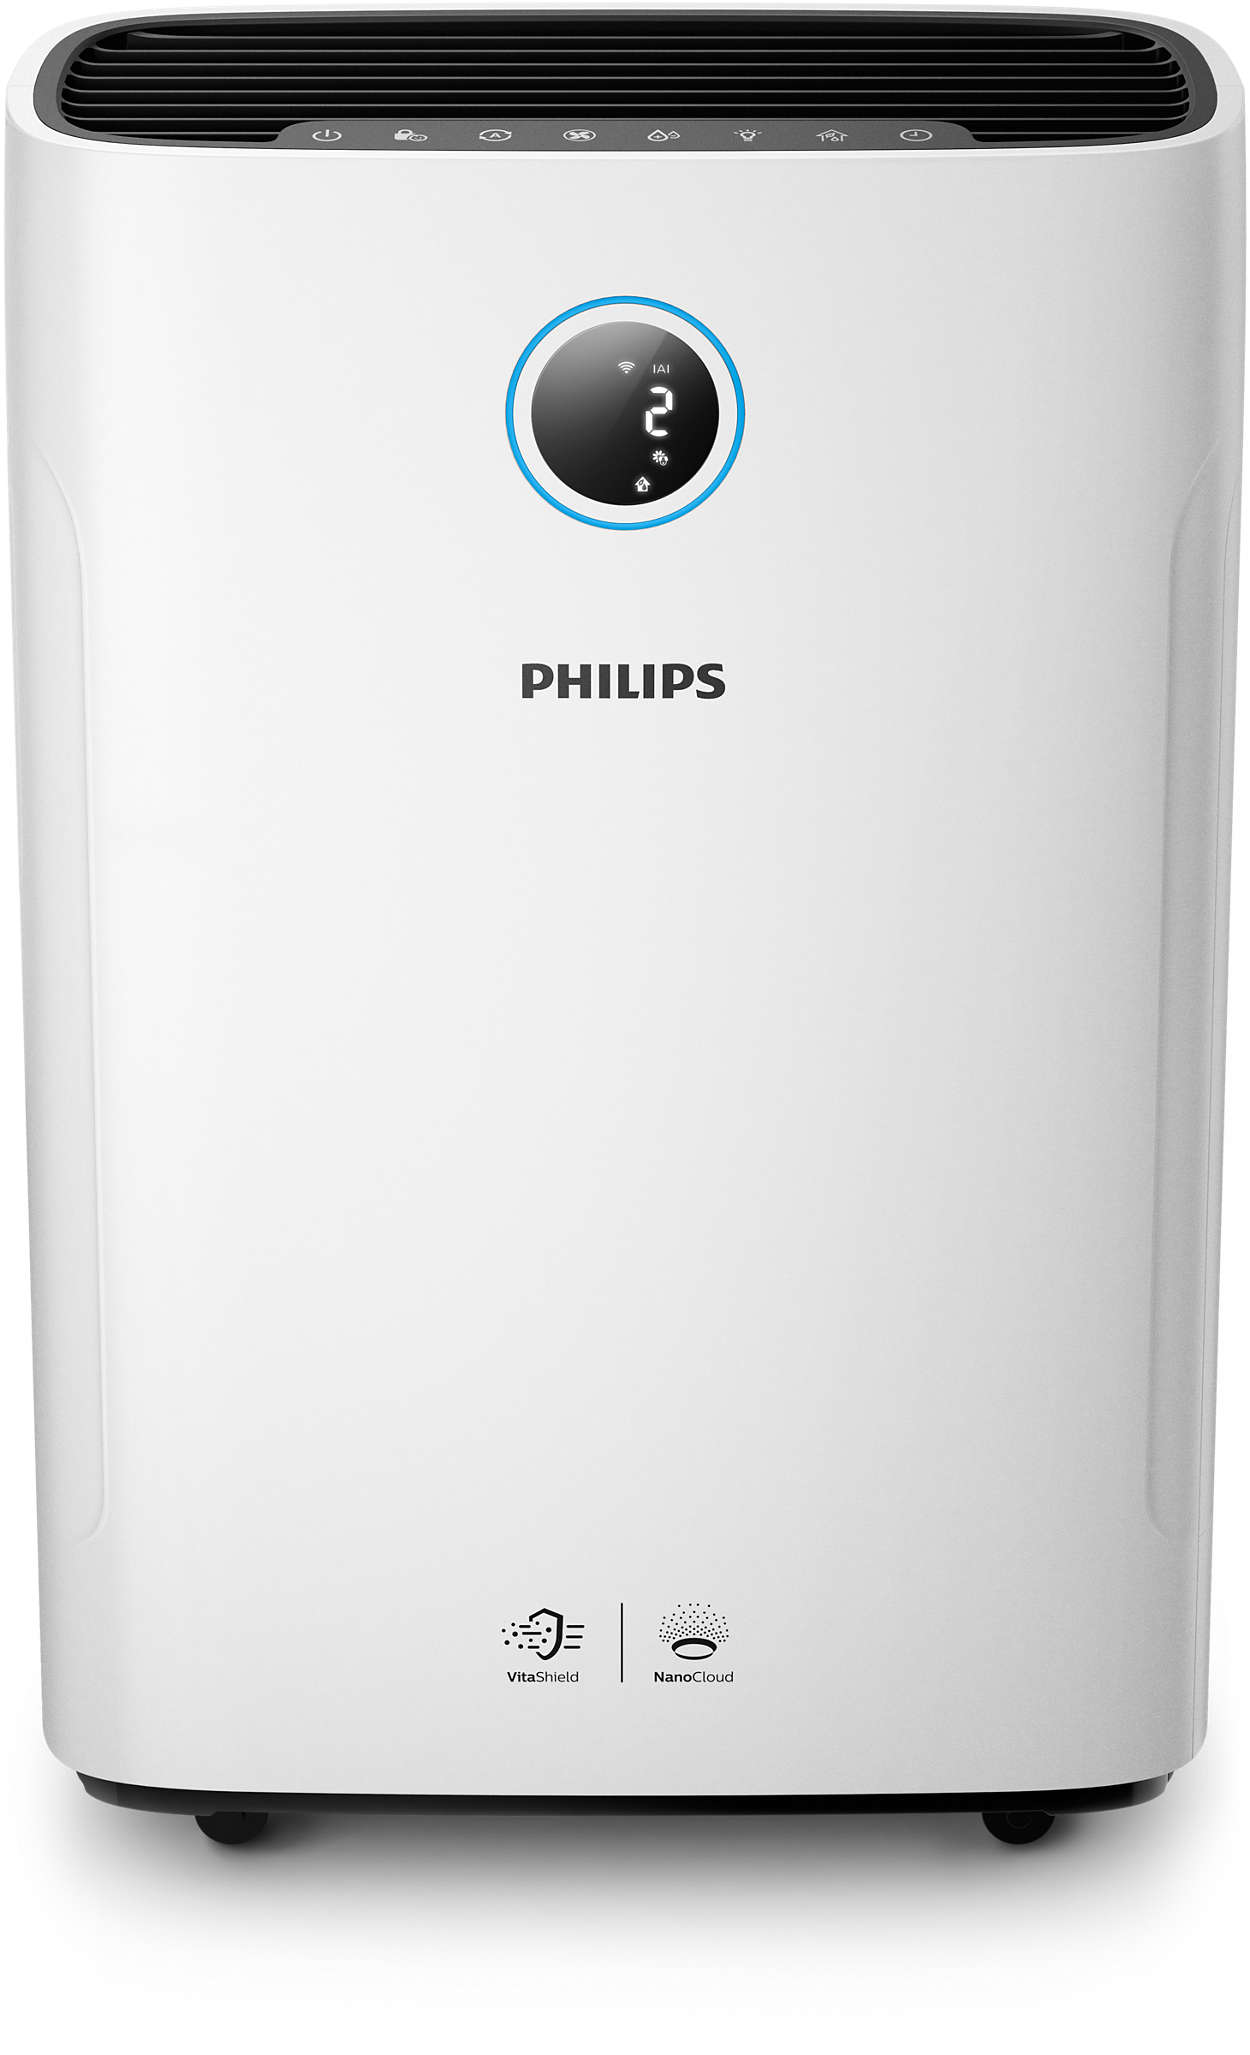 Philips air purifier 2000i